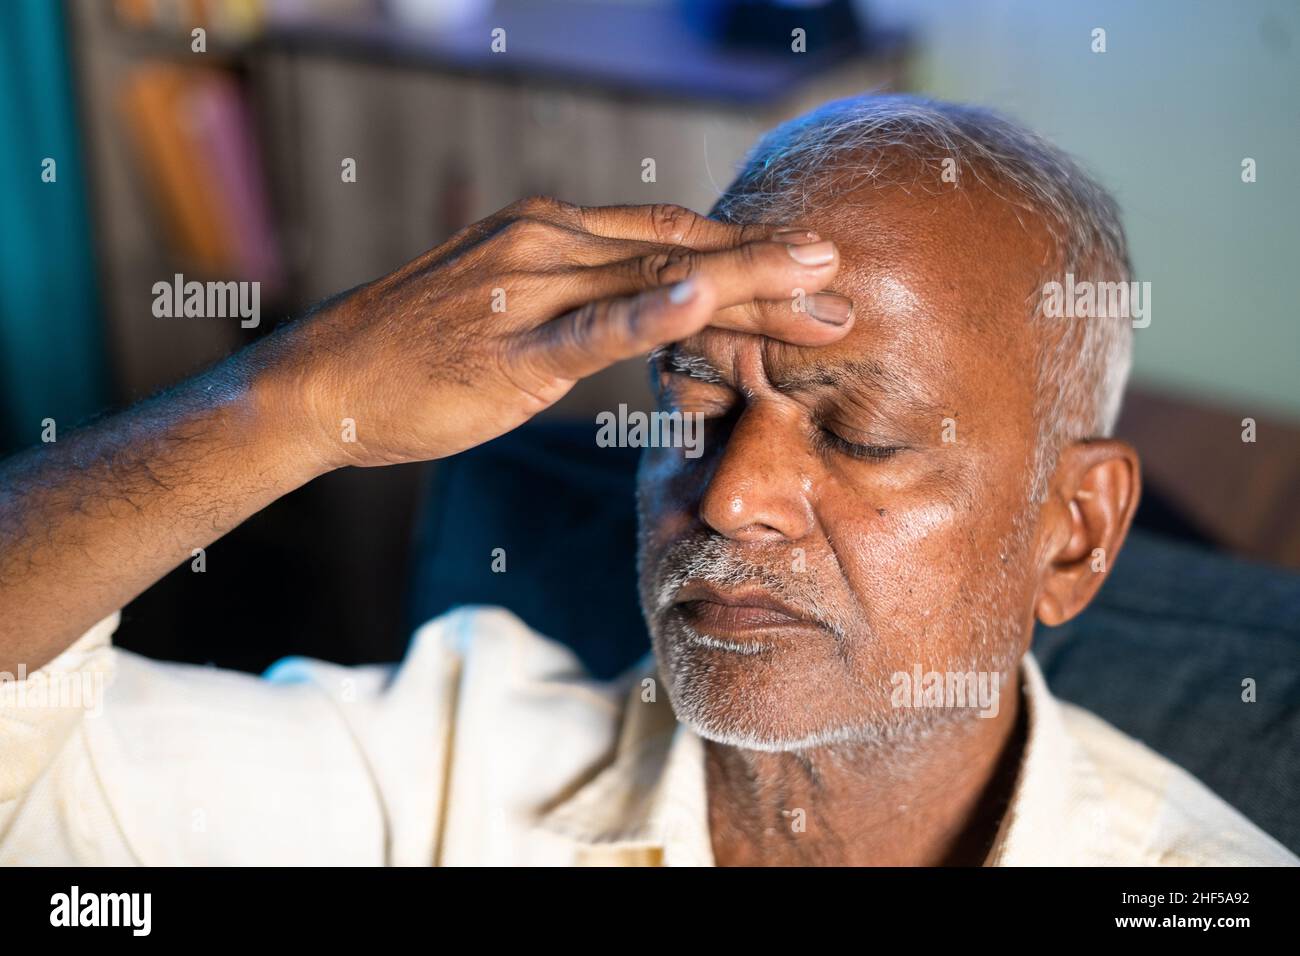 Senior man suffering from headache - concept of stress, family problems and illness during coronavirus covid-19 lockdown. Stock Photo